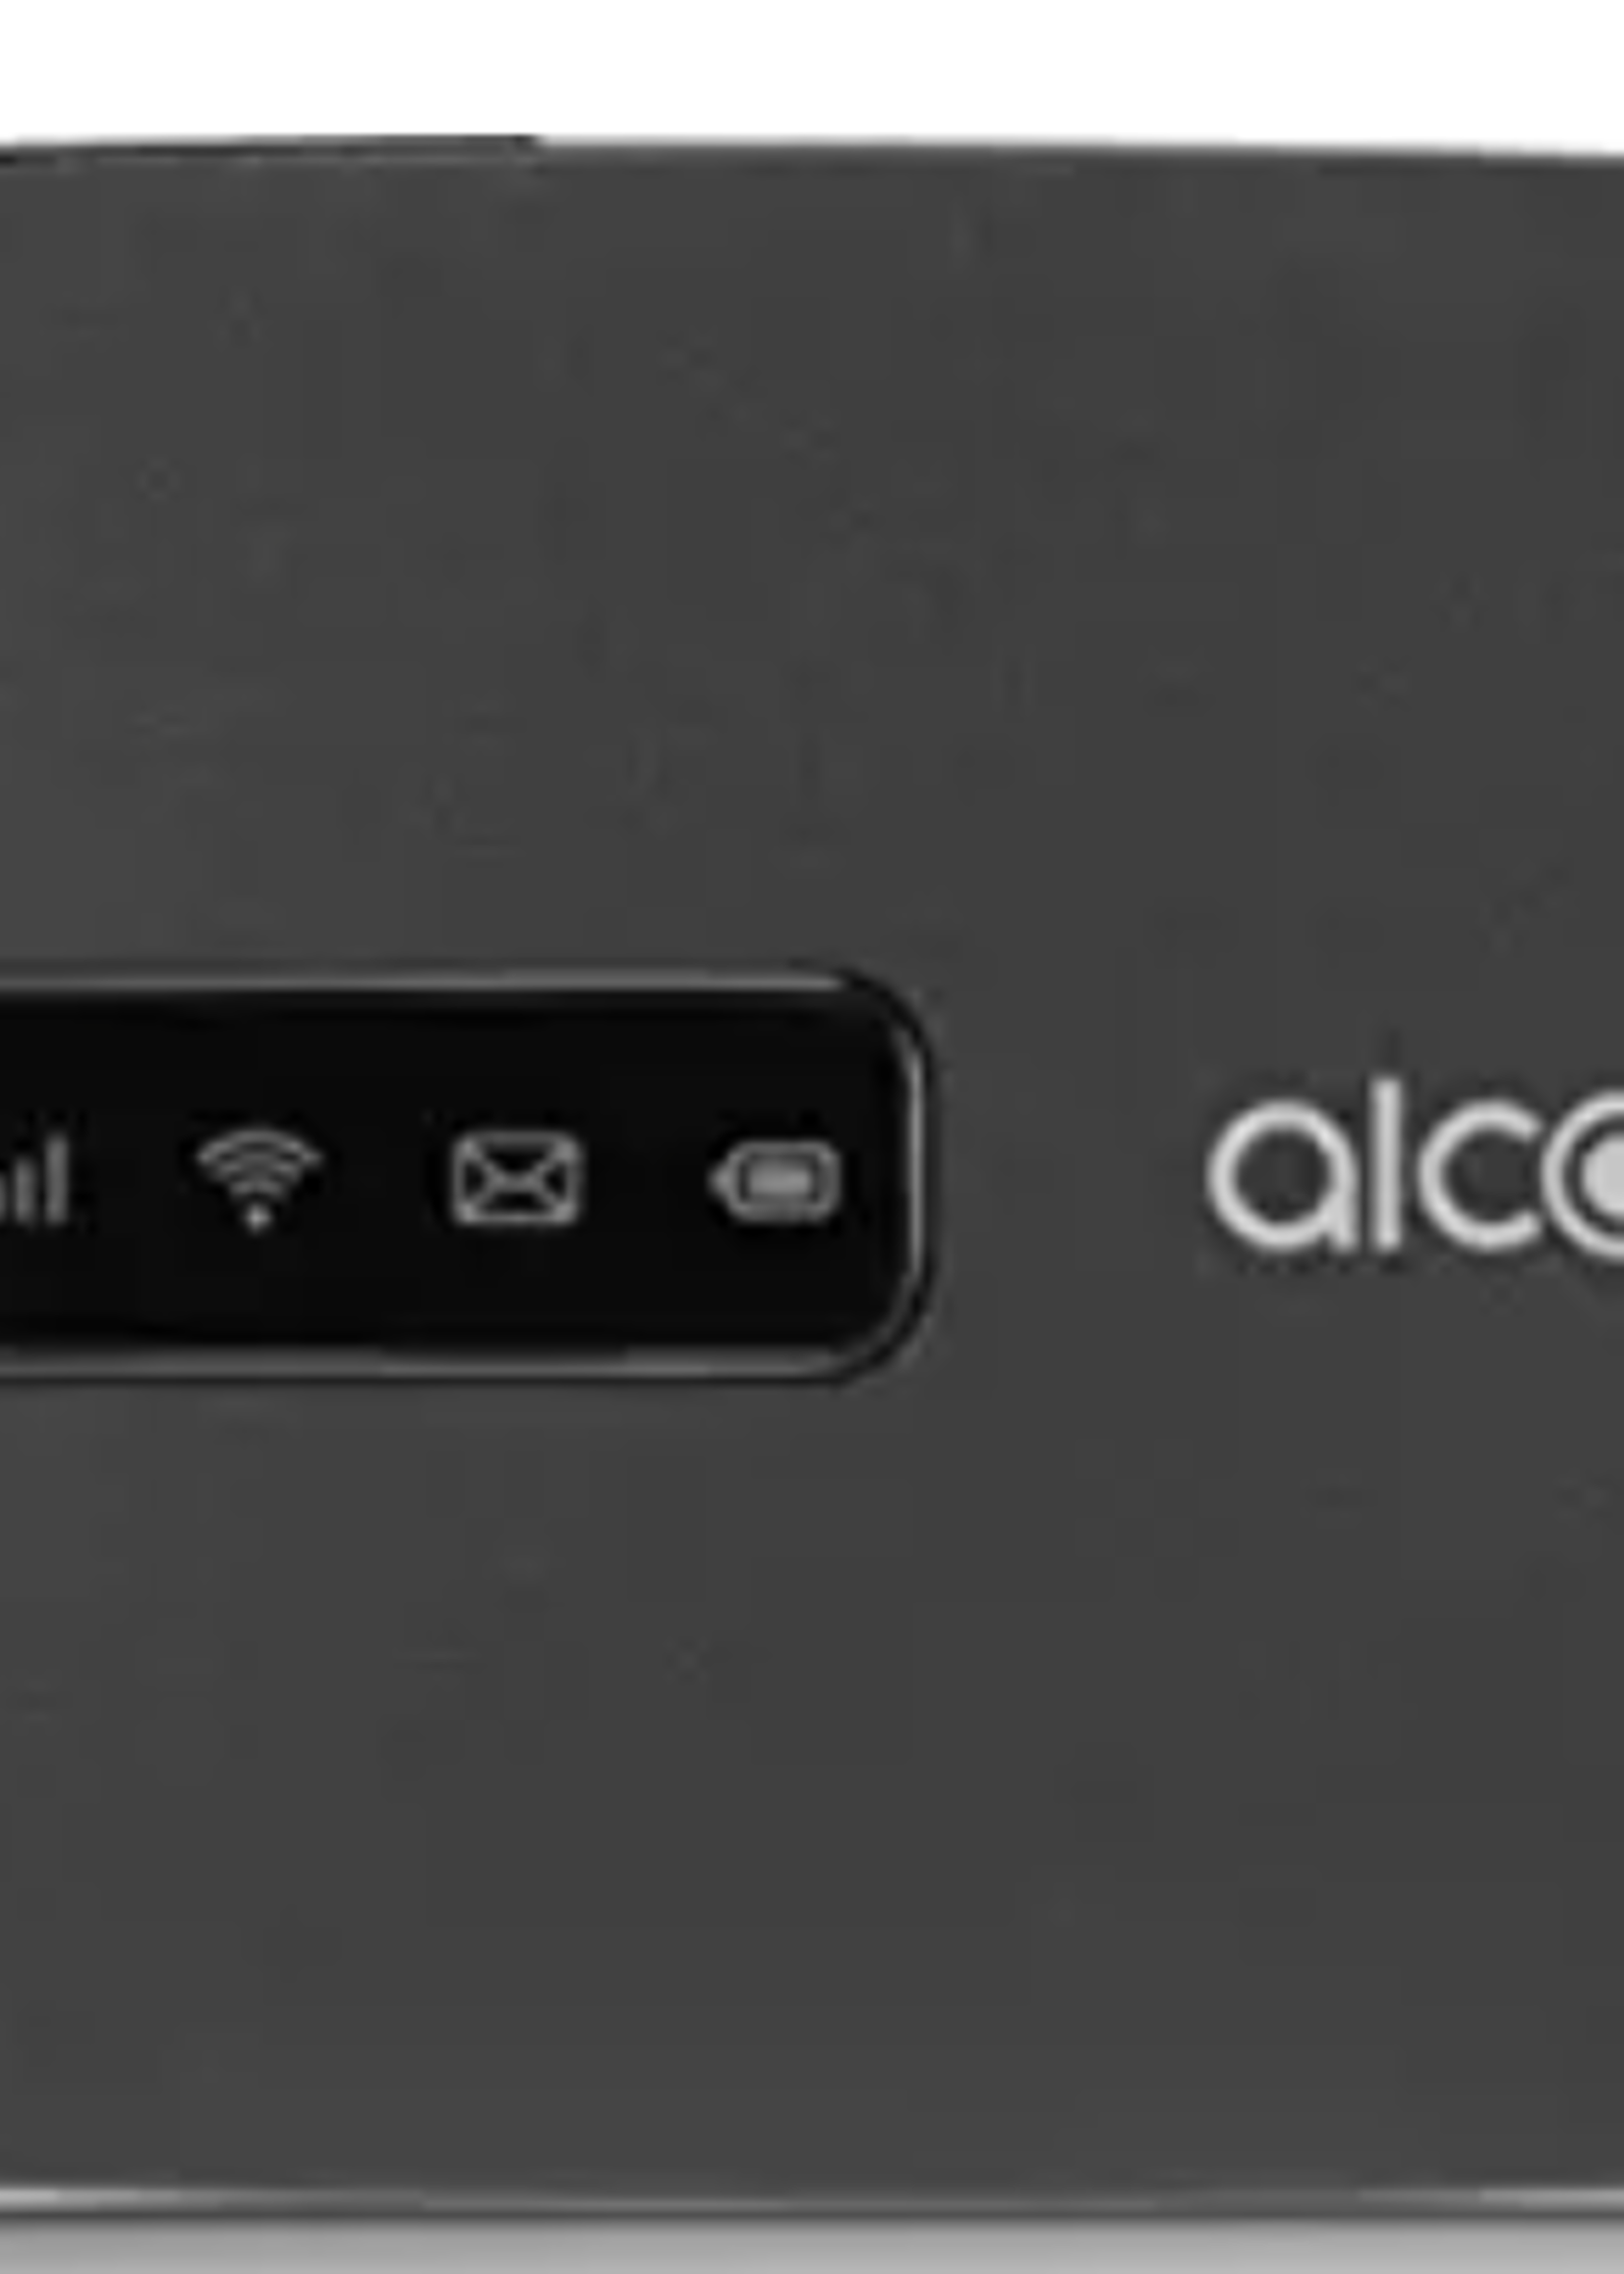 ALCATEL Alcatel Link Zone Mobile WiFi MW41